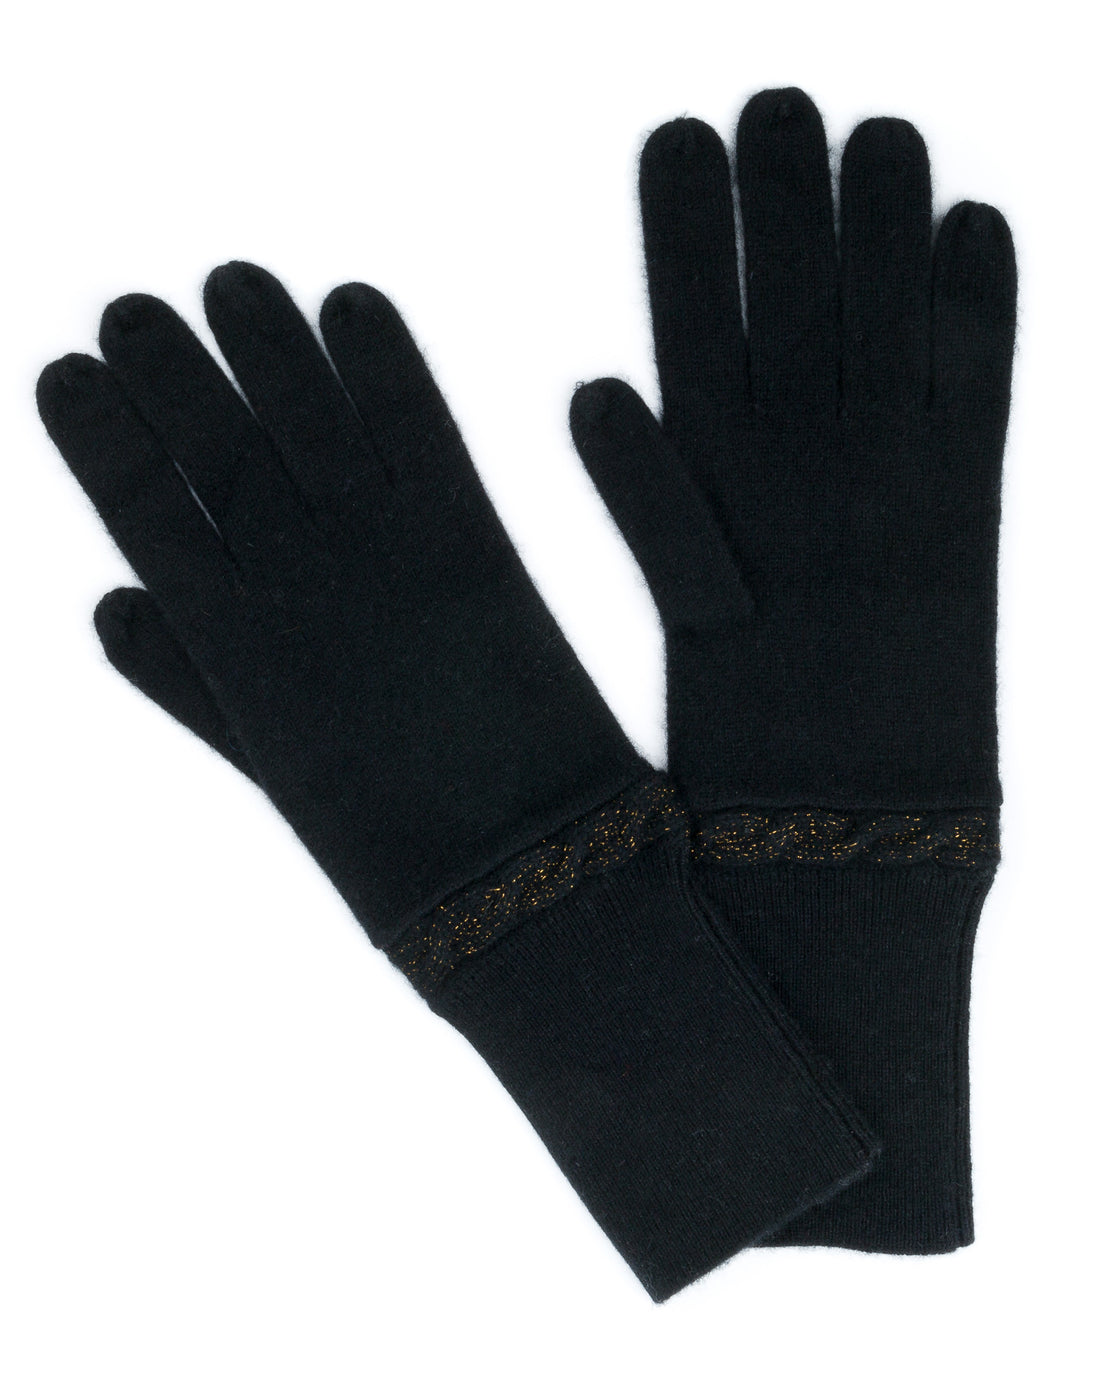 ACCESSORIES - Cable Lurex Cashmere Gloves